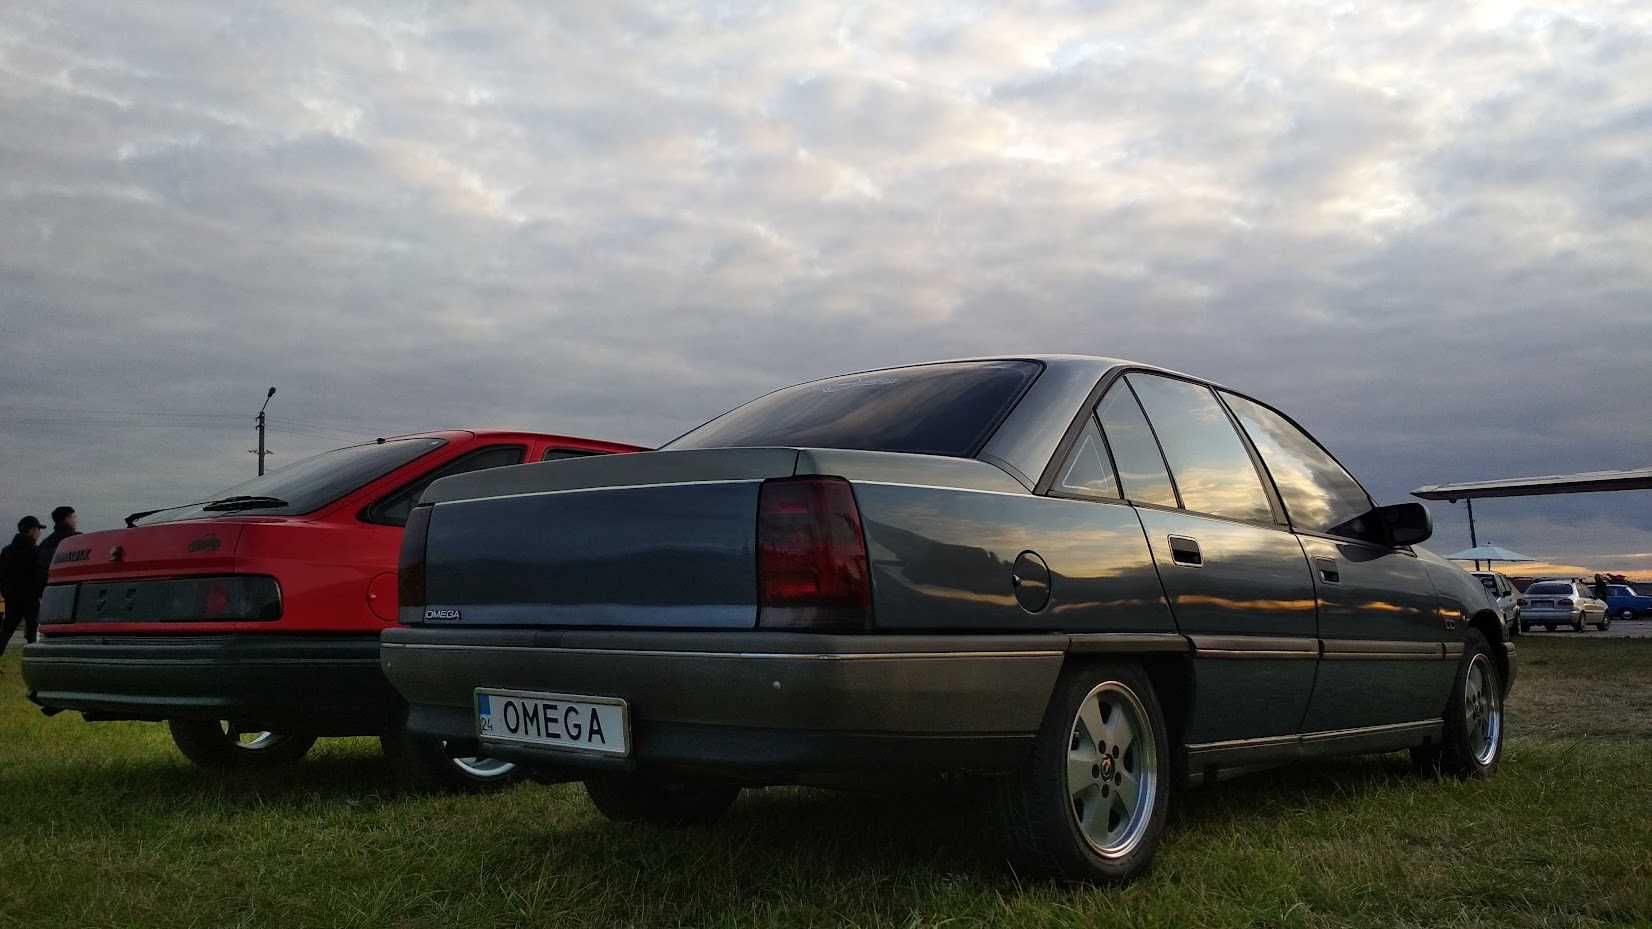 Opel Omega A 2.0 1987